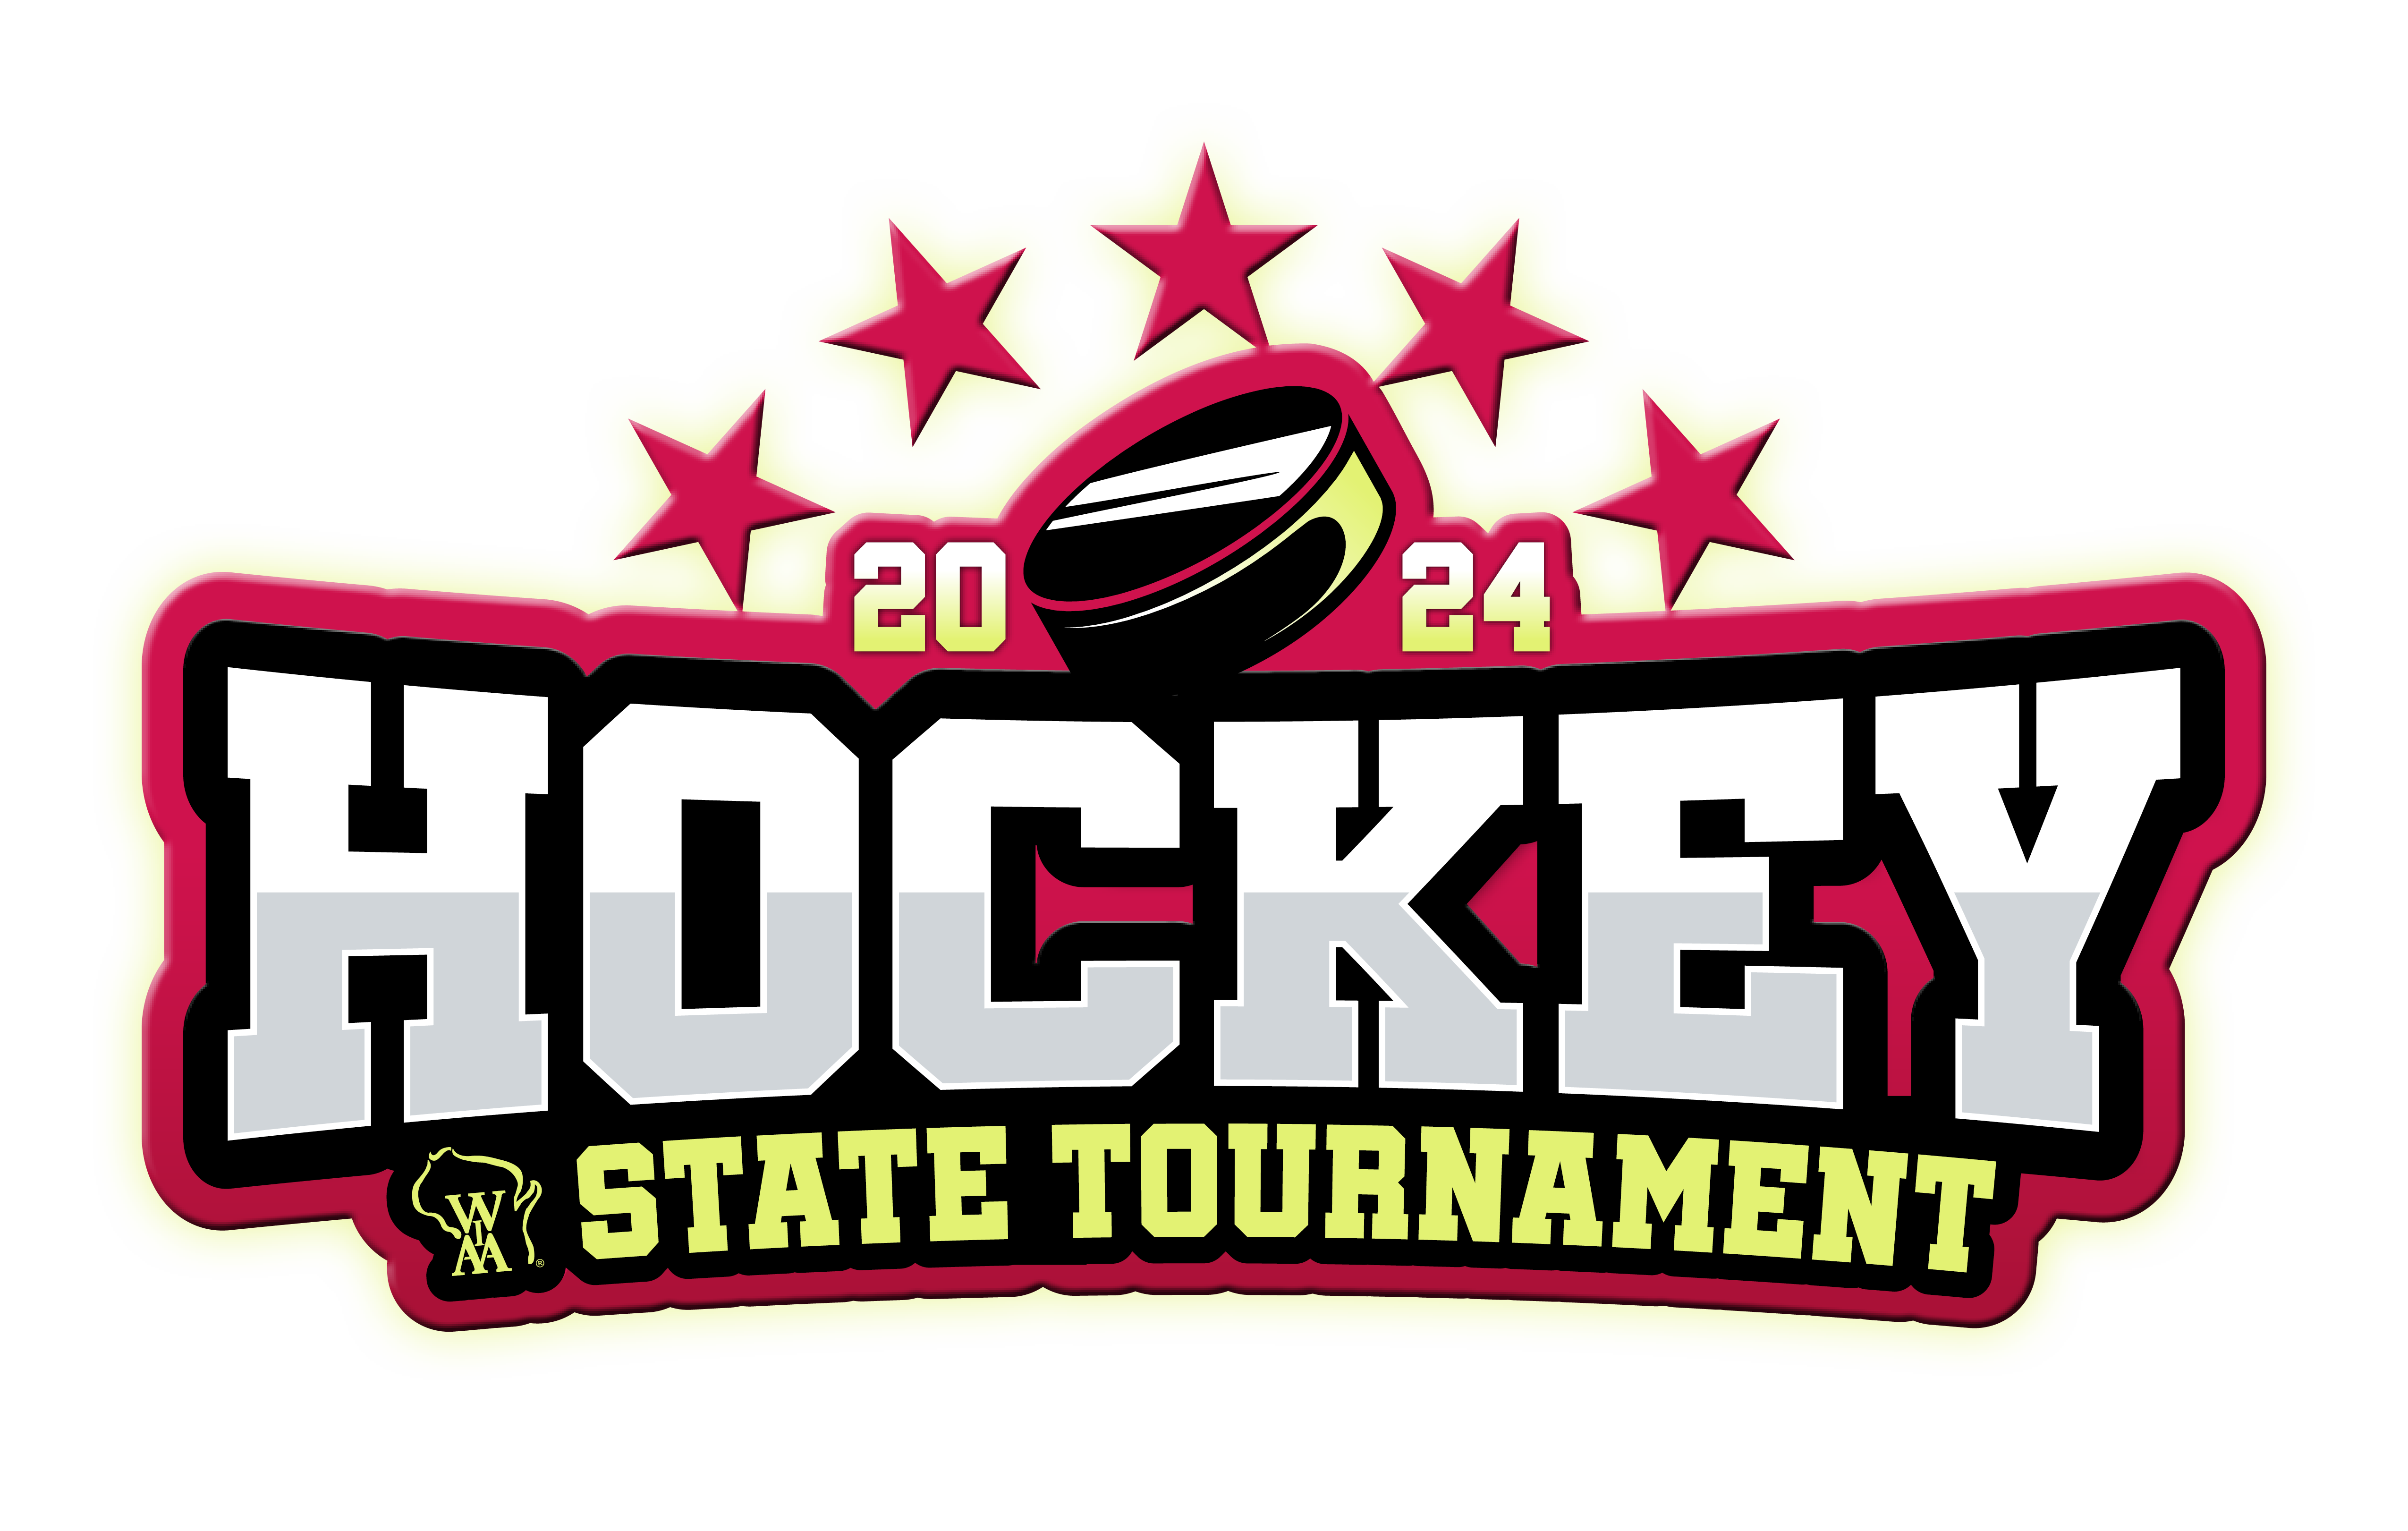 Hockey state tournament logo.